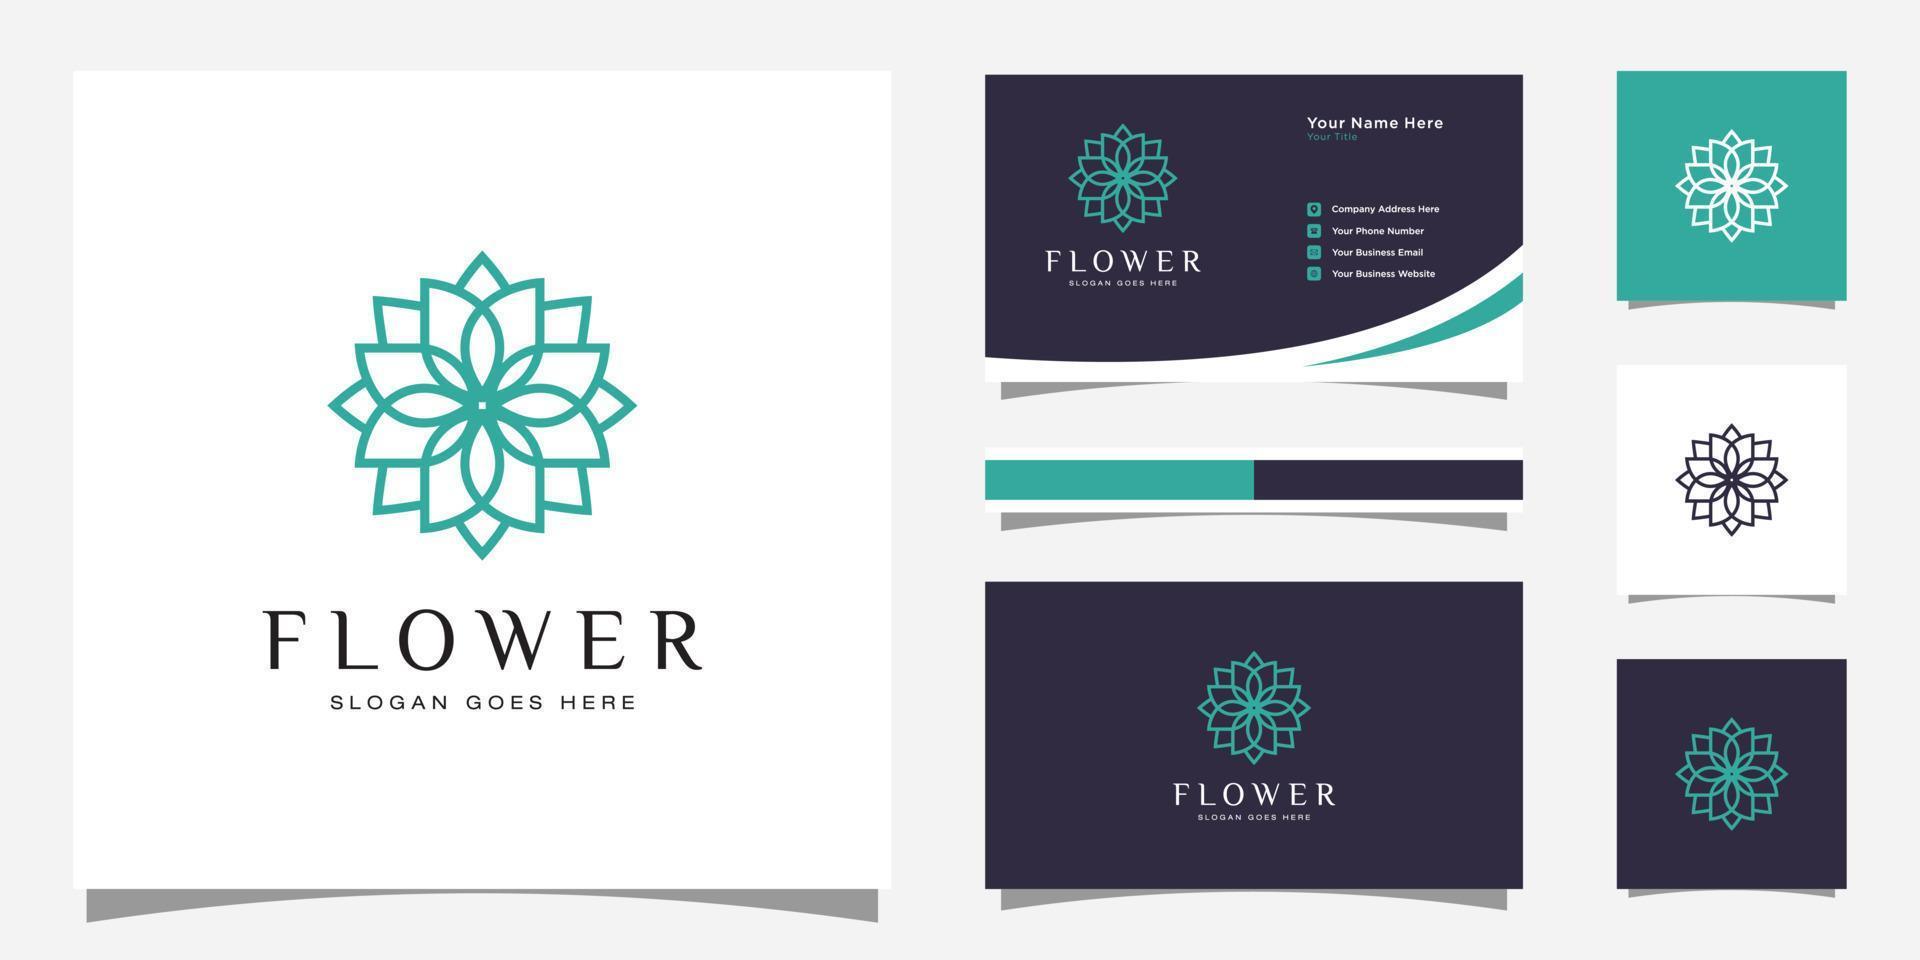 blomma monoline lyx logotyp med visitkort design vektor